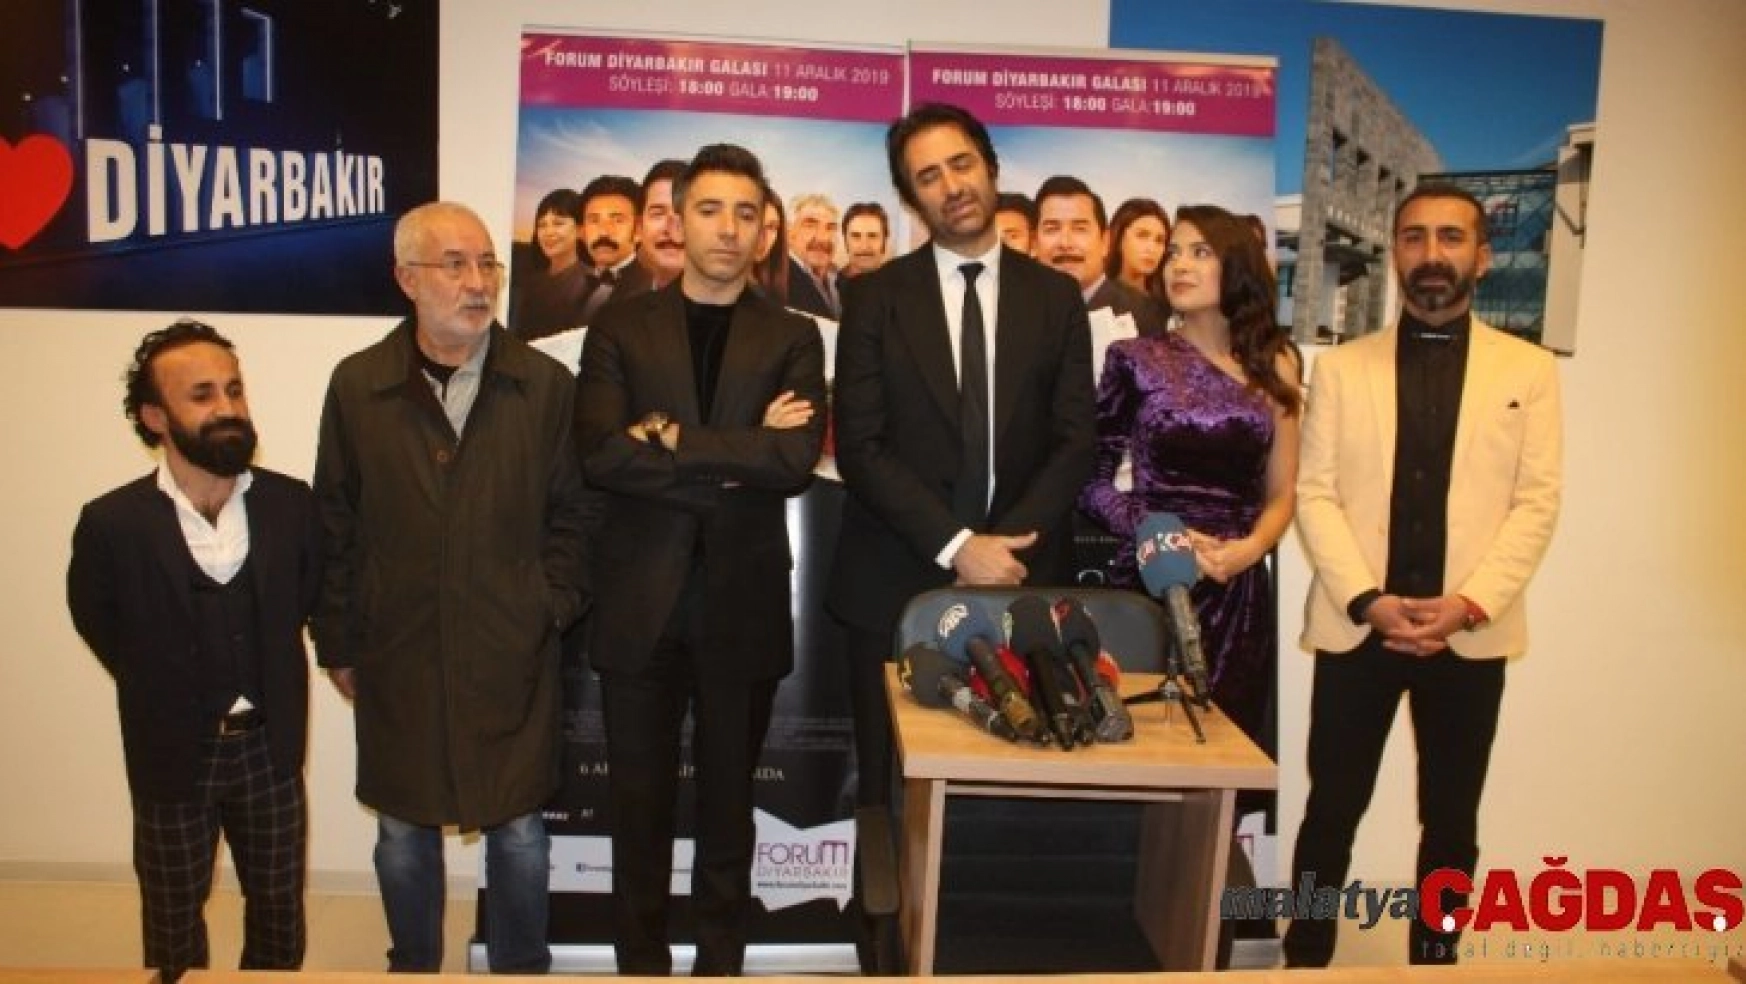 Diyarbakır'da Mahsun Kırmızıgül'ün yeni filminin galası yapıldı